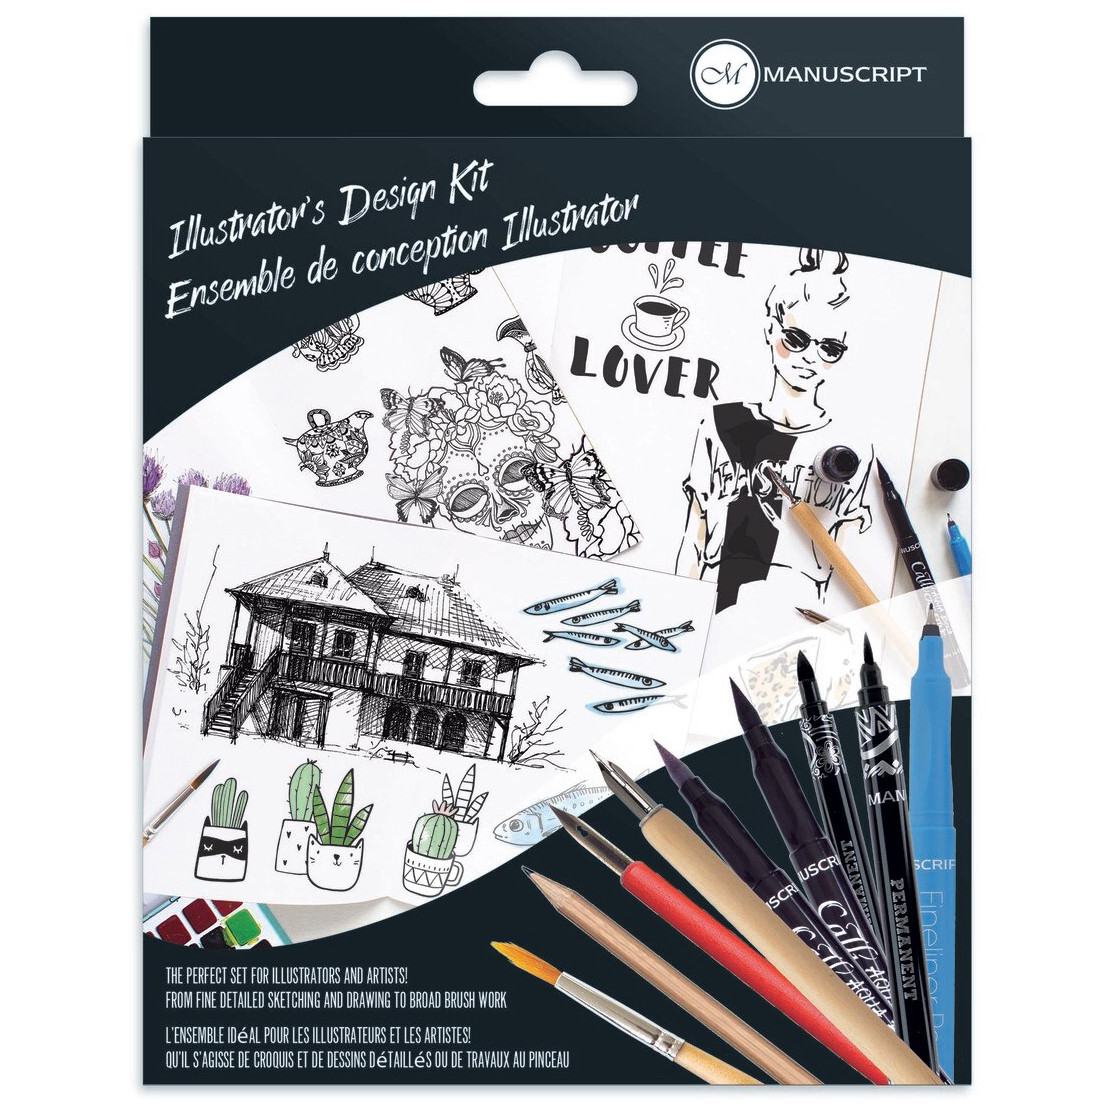 Manuscript Callicreative Illustrator's Design Kit